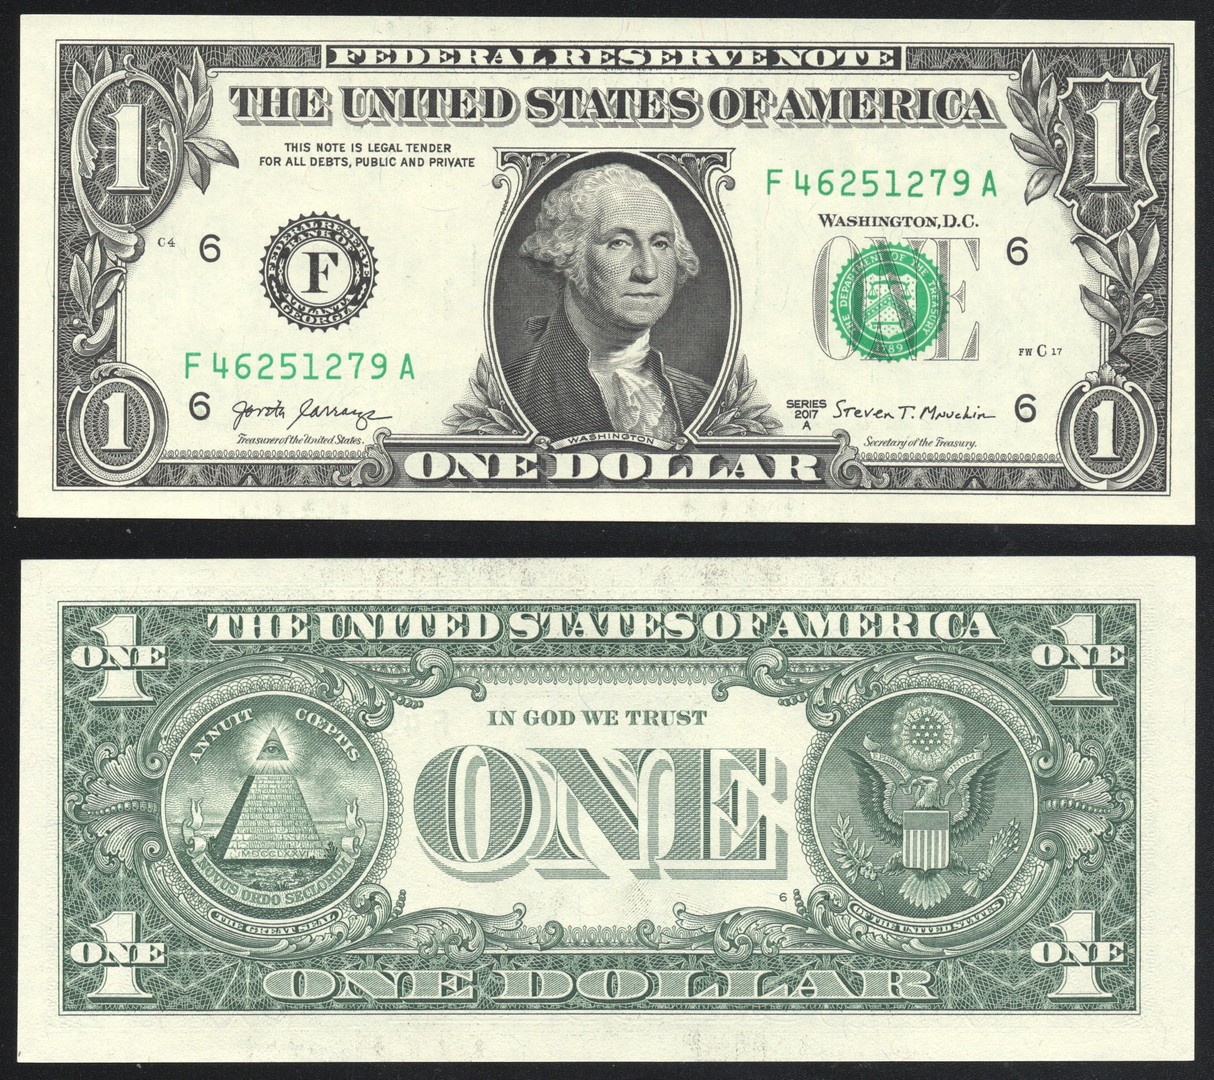 1 июля доллар. Один доллар. Один доллар США. Два доллара одной купюрой. Банкноты США.